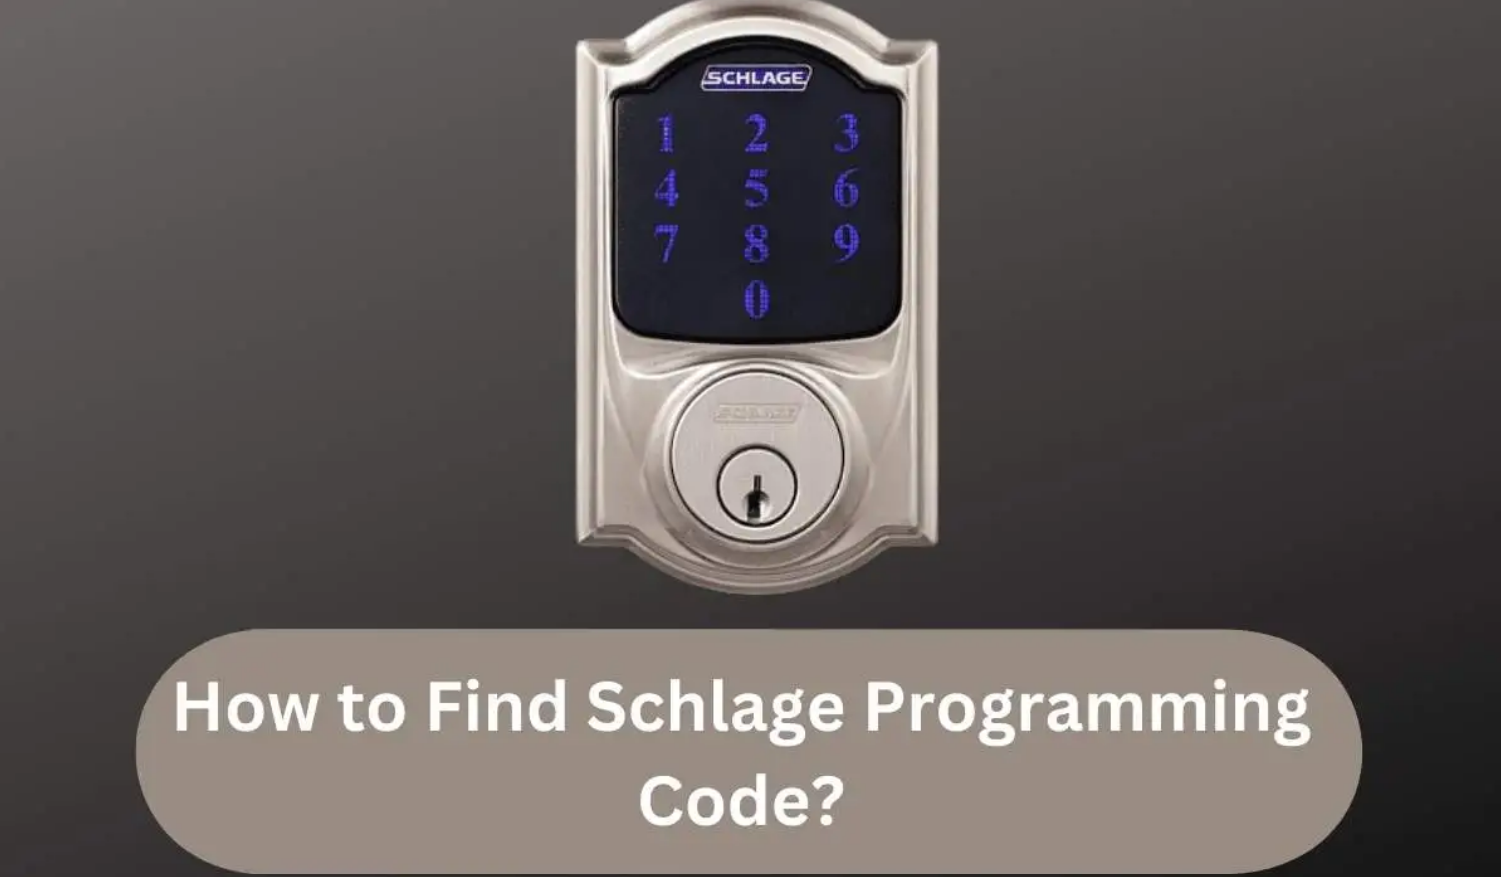 How to find Schlage programming code